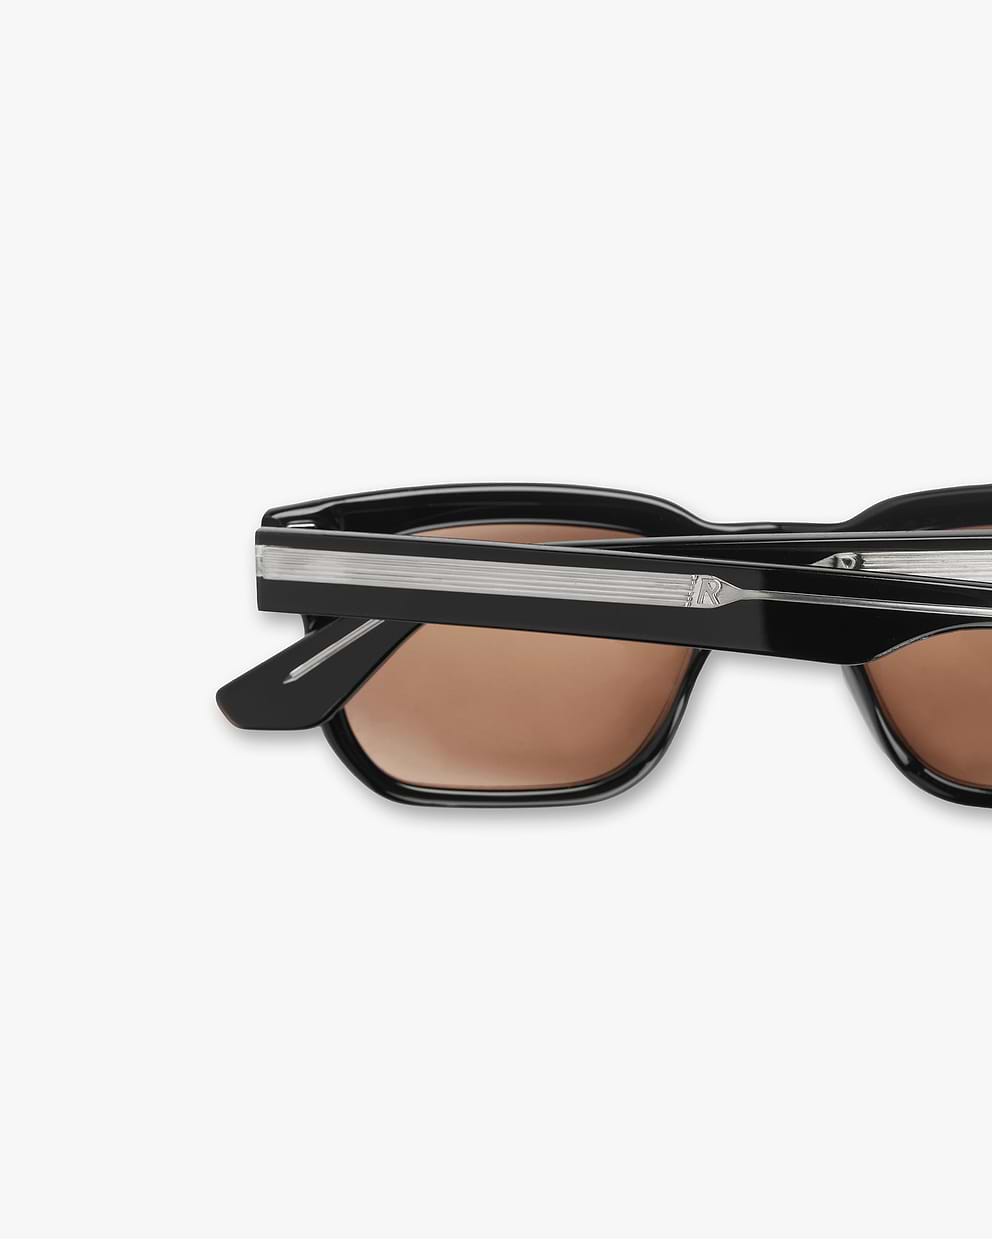 Represent Hamptons Sunglasses - Jet Black